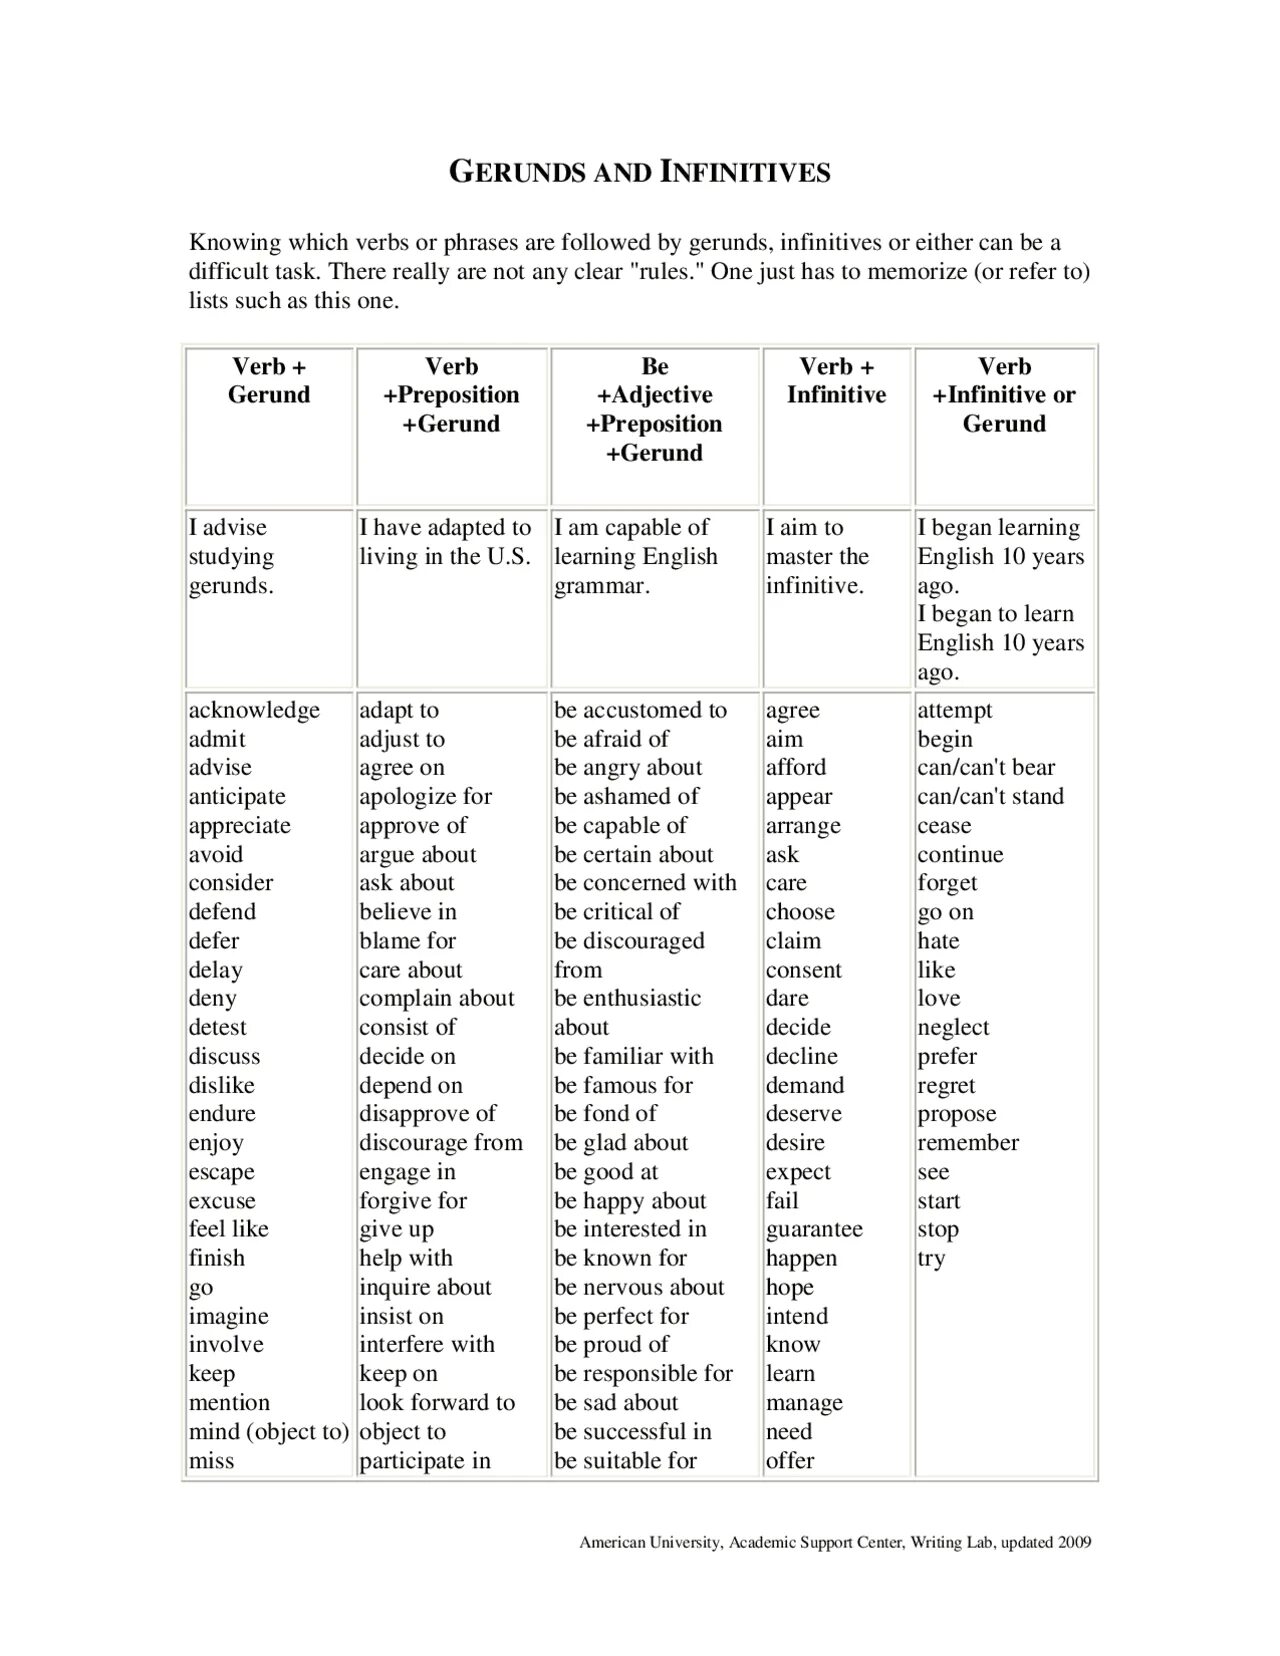 Verbs followed by Gerund or Infinitive ответы. Gerund and Infinitive таблица. Задания на герундий и инфинитив. Герундий и инфинитив простые упражнения.